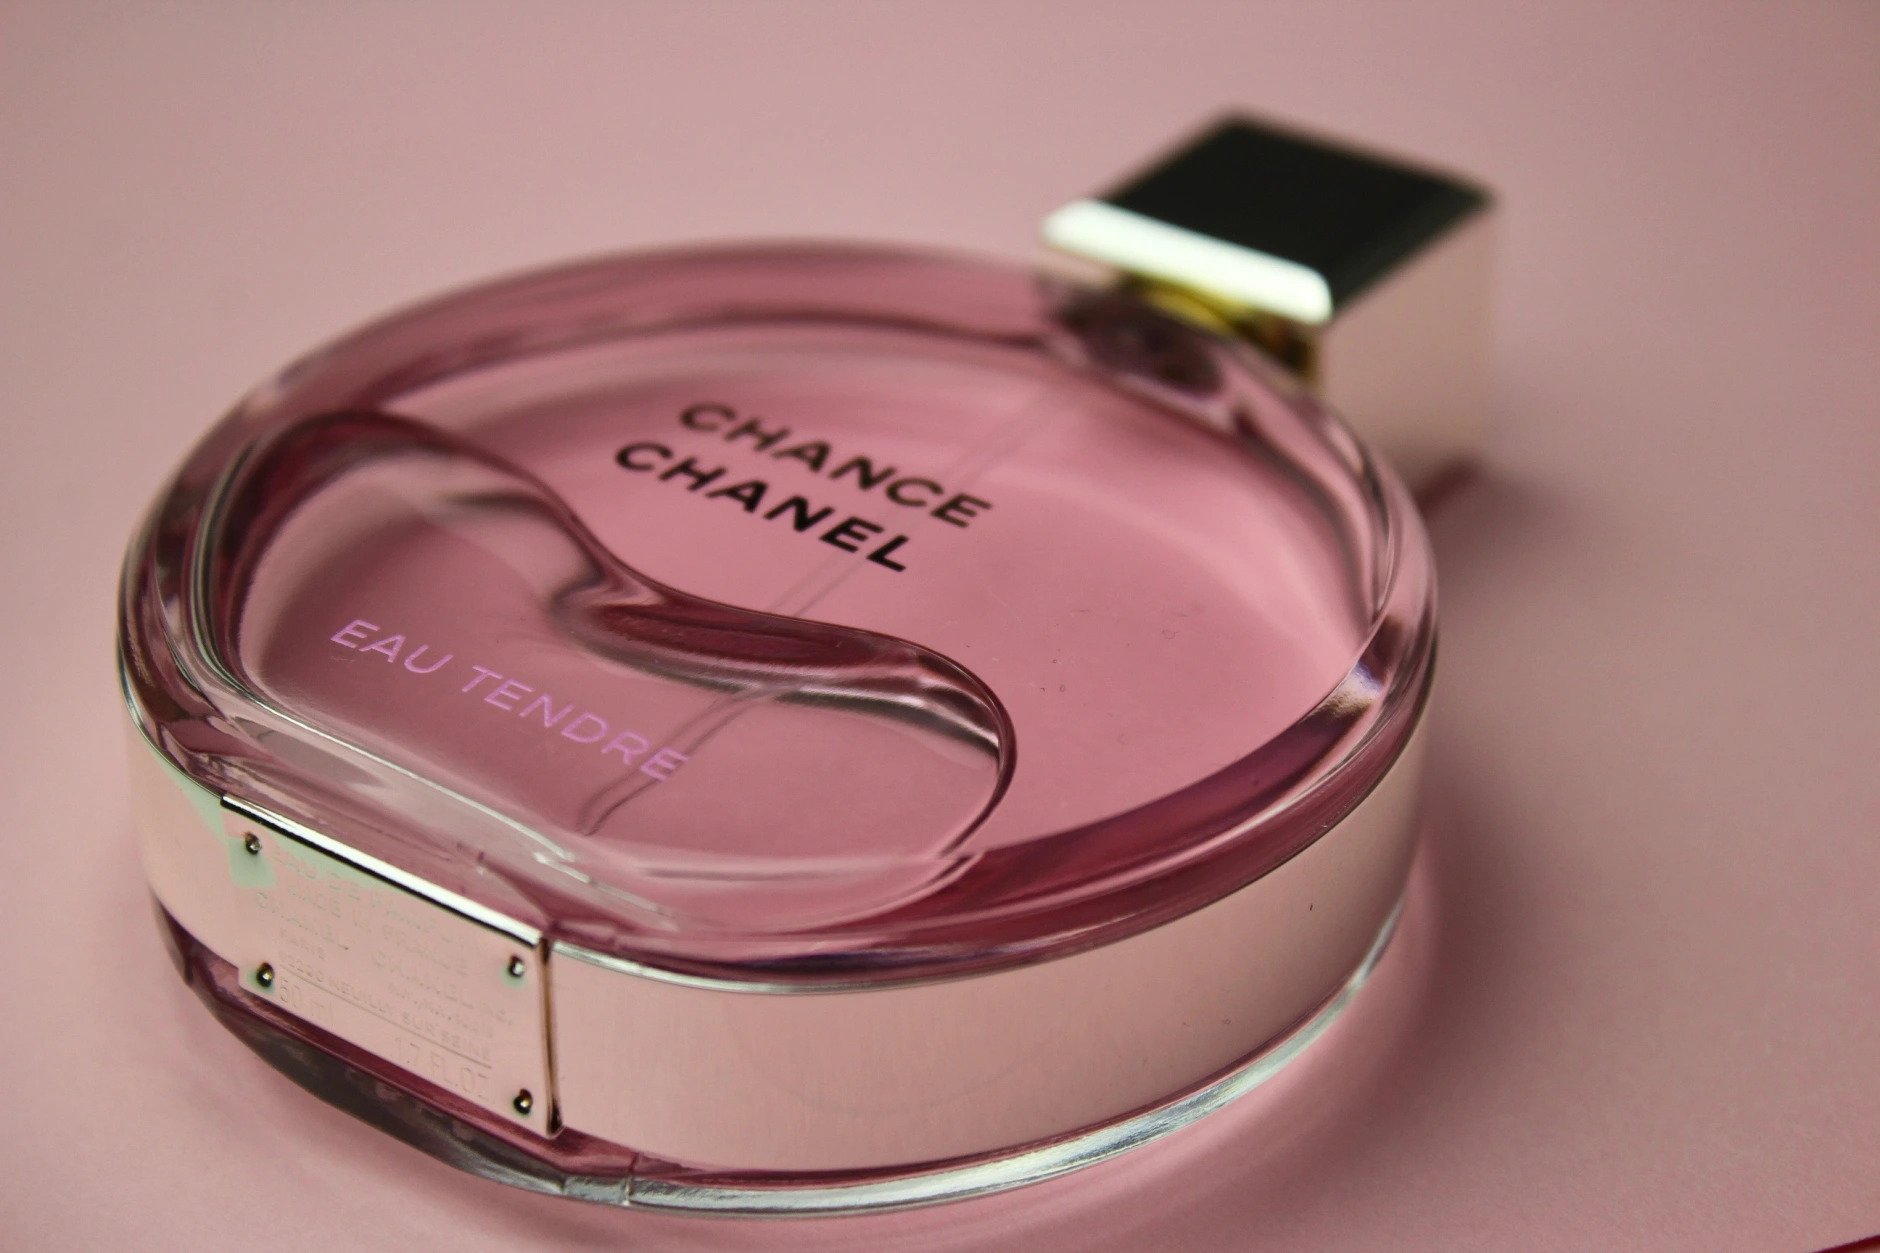 Chanel chance 100